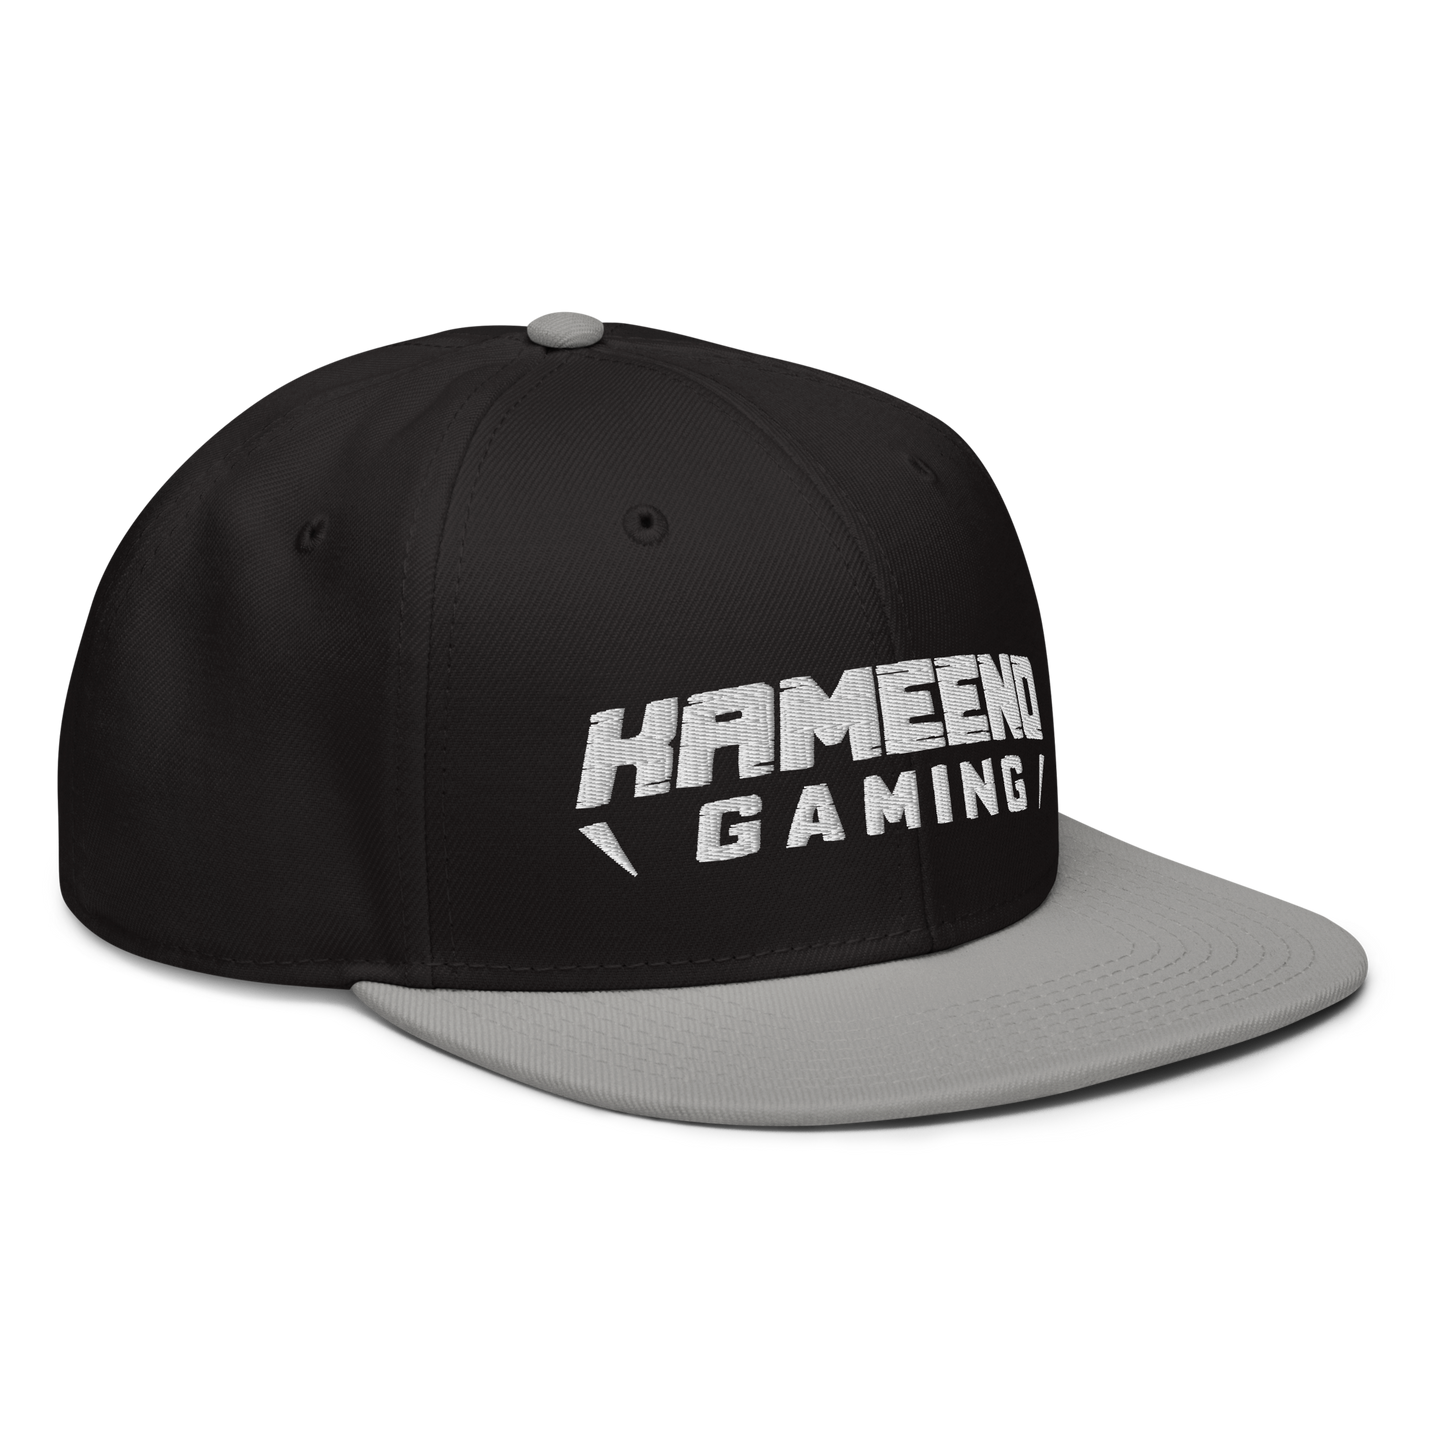 KAMEENO GAMING - Snapback Cap